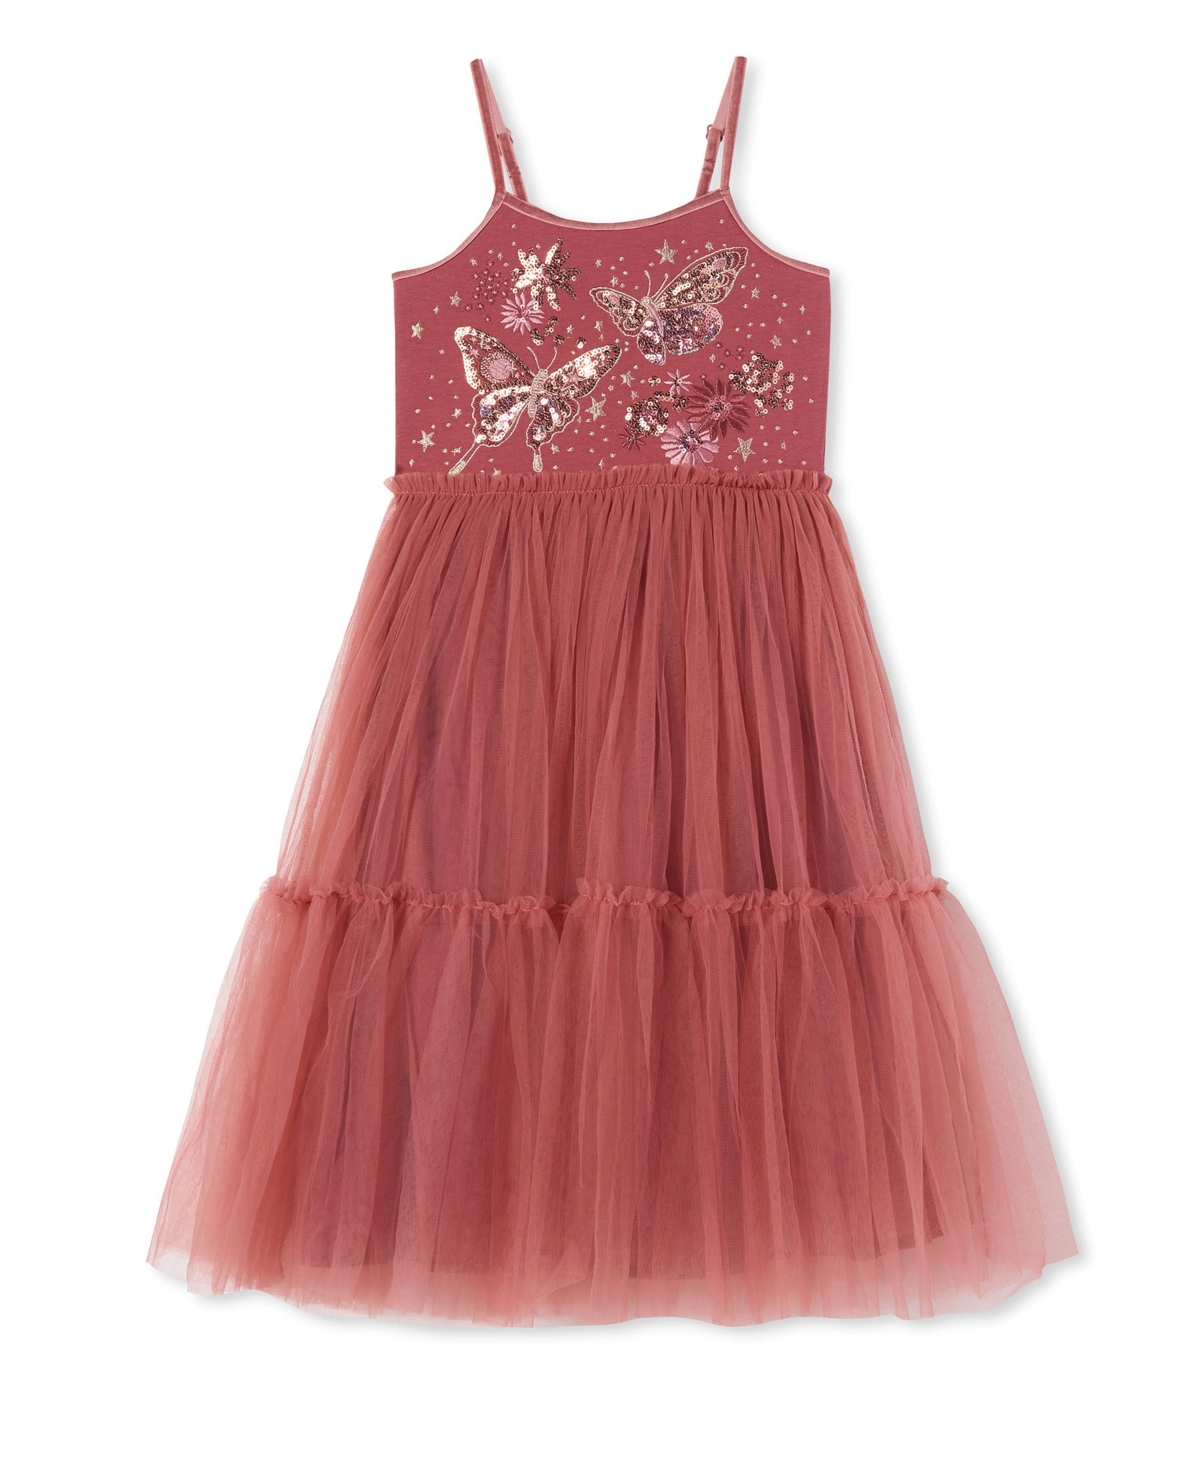 Cotton On Toddler Girls Iris Dress Up Dress In Vintage-like Berry Butterflies